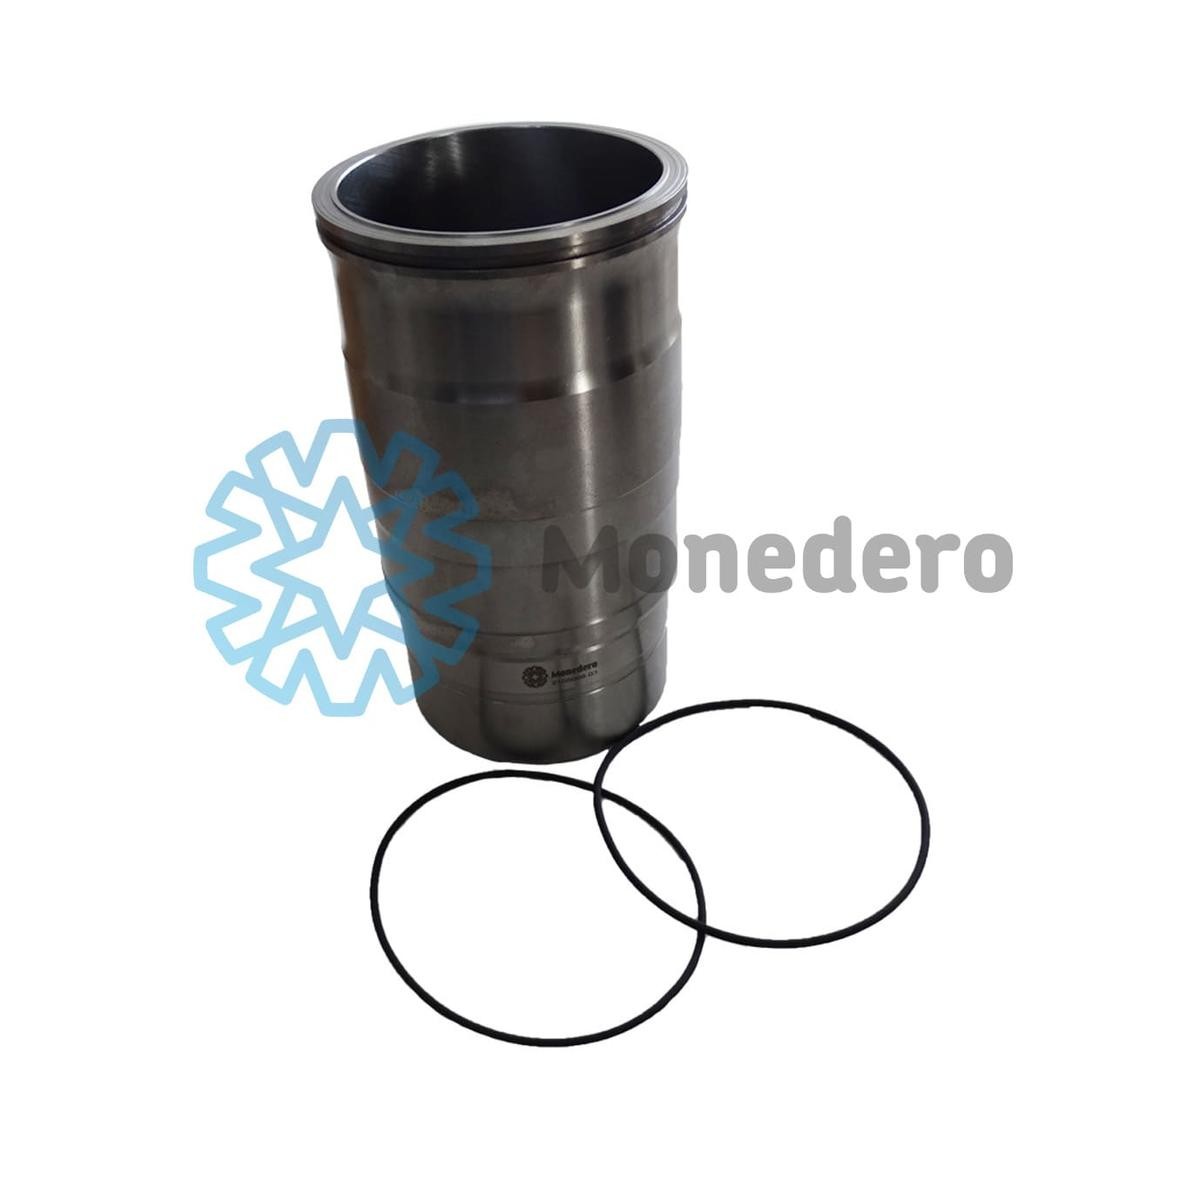 MONEDERO 40011300004 Cylinder Sleeve 1917105